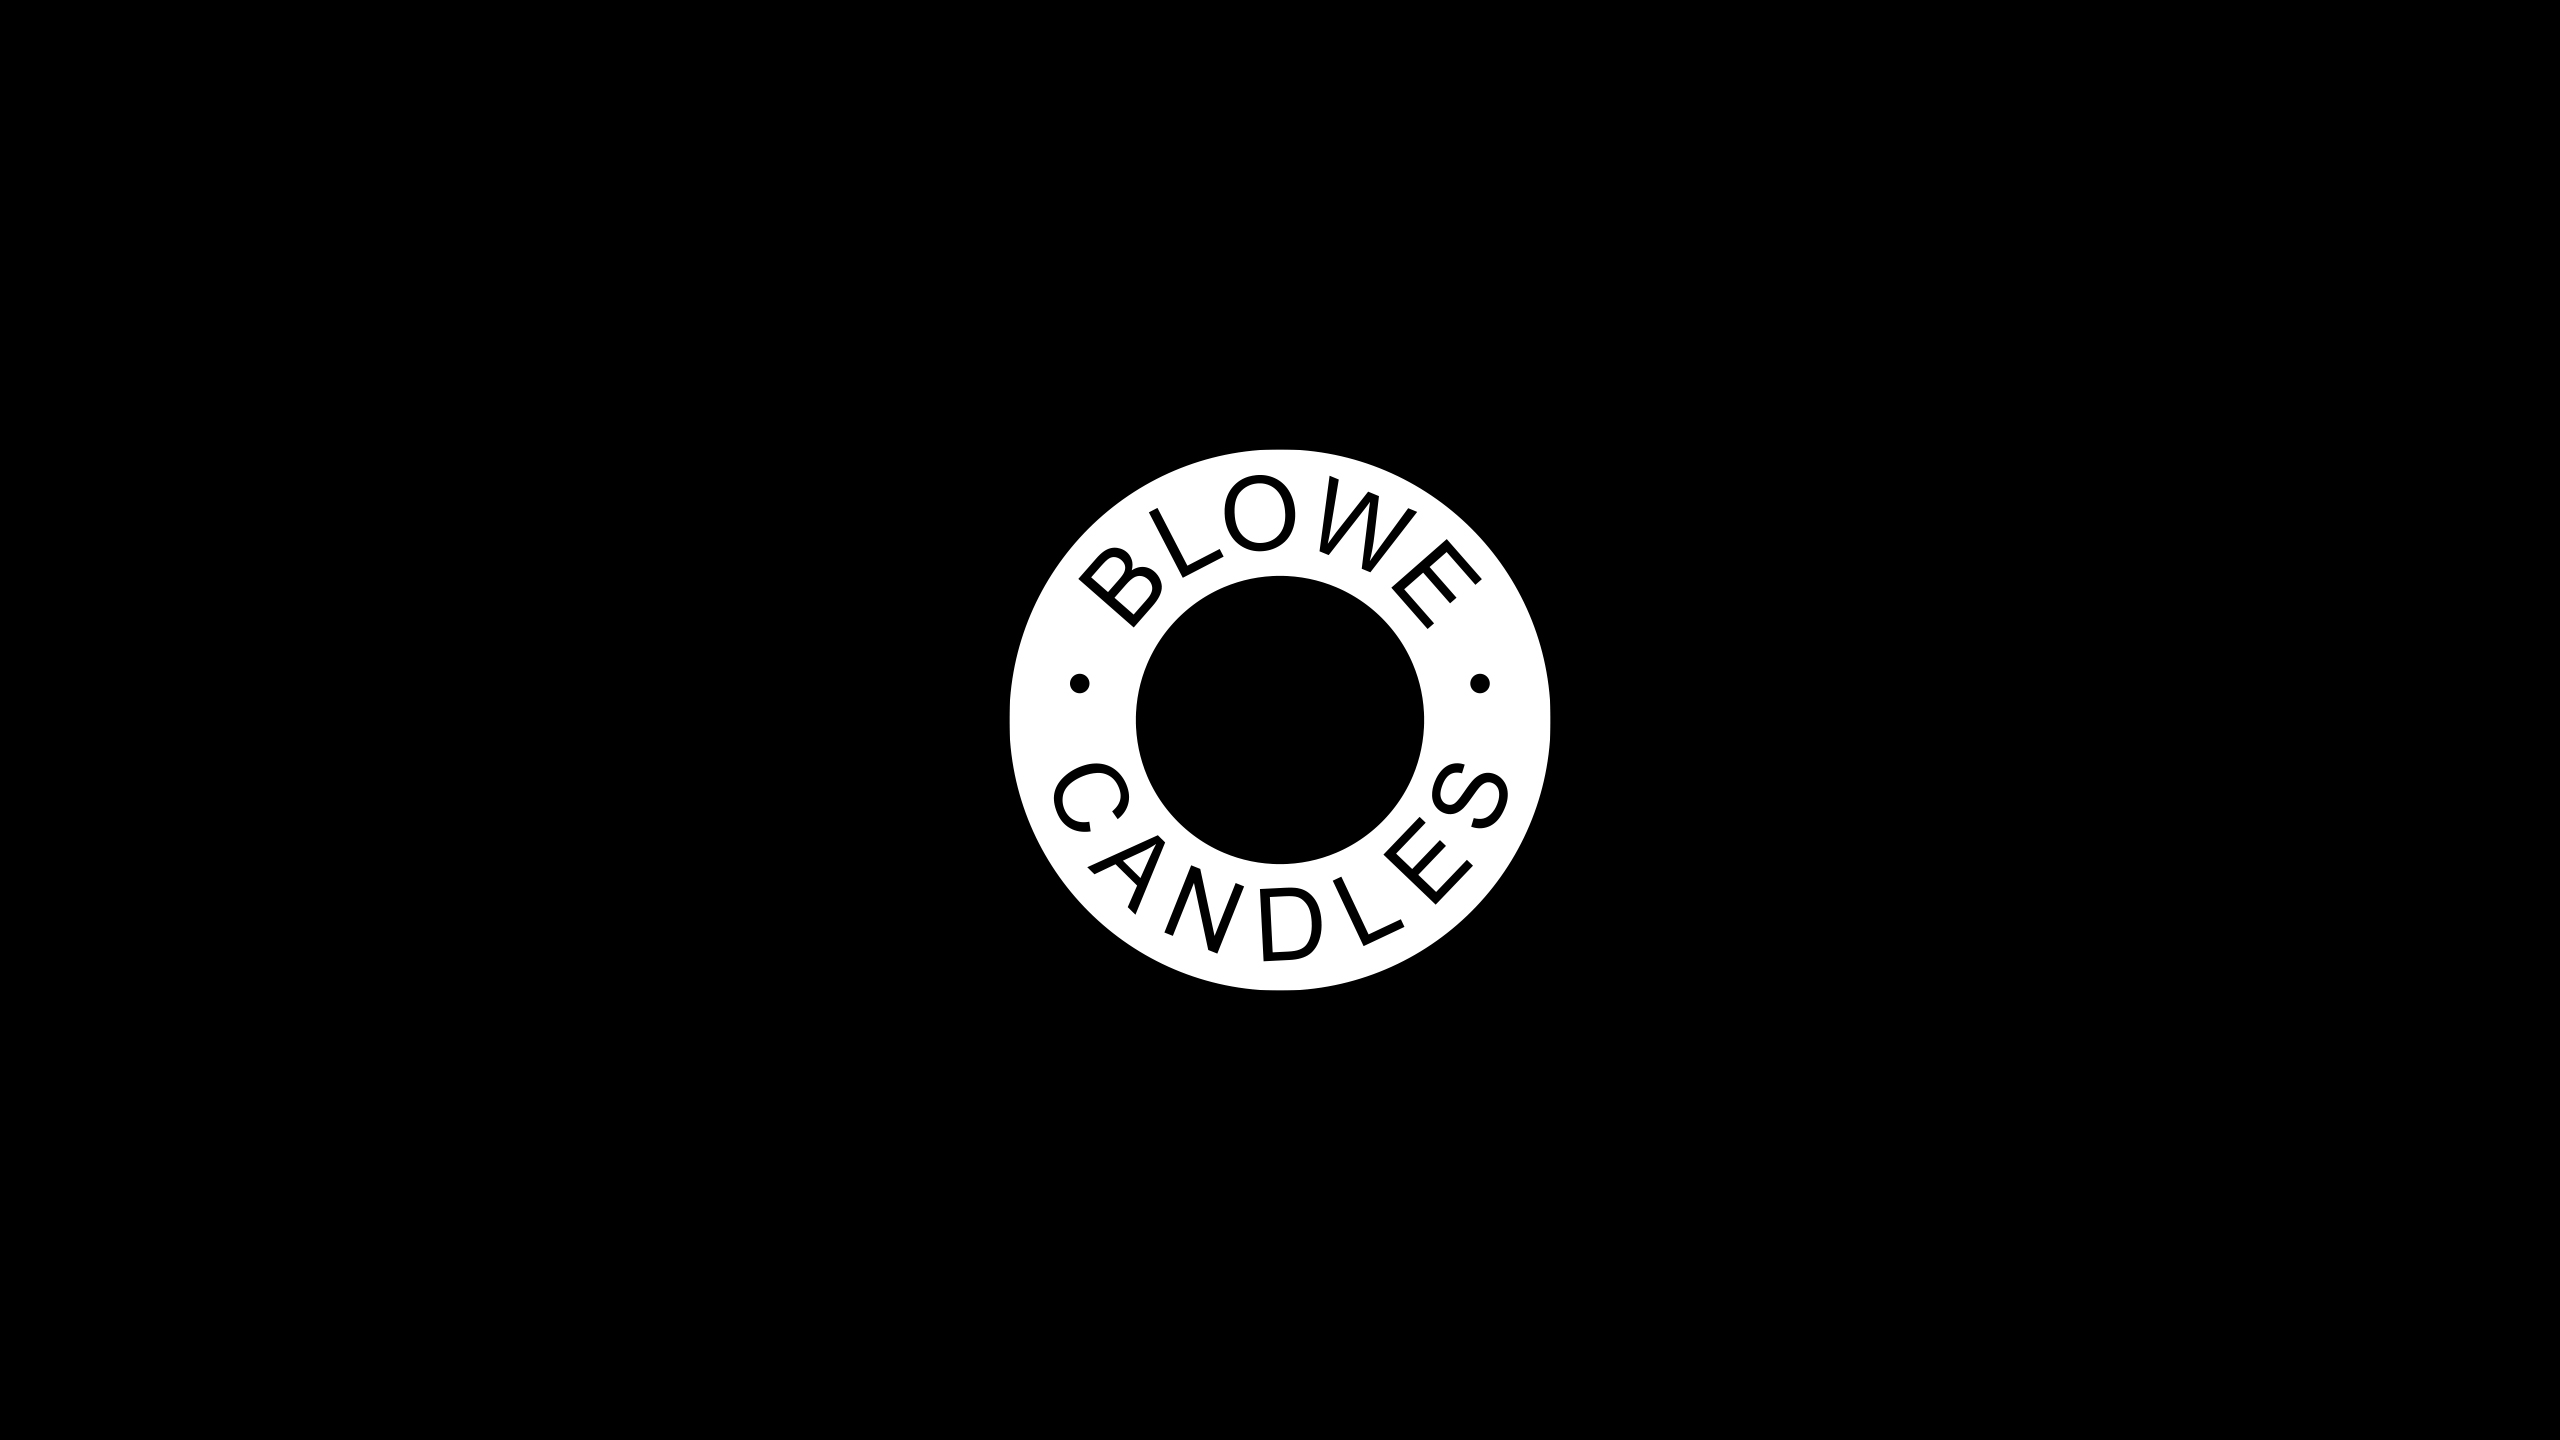 Studio-Hrastar-Logofolio-Blowe-Candles